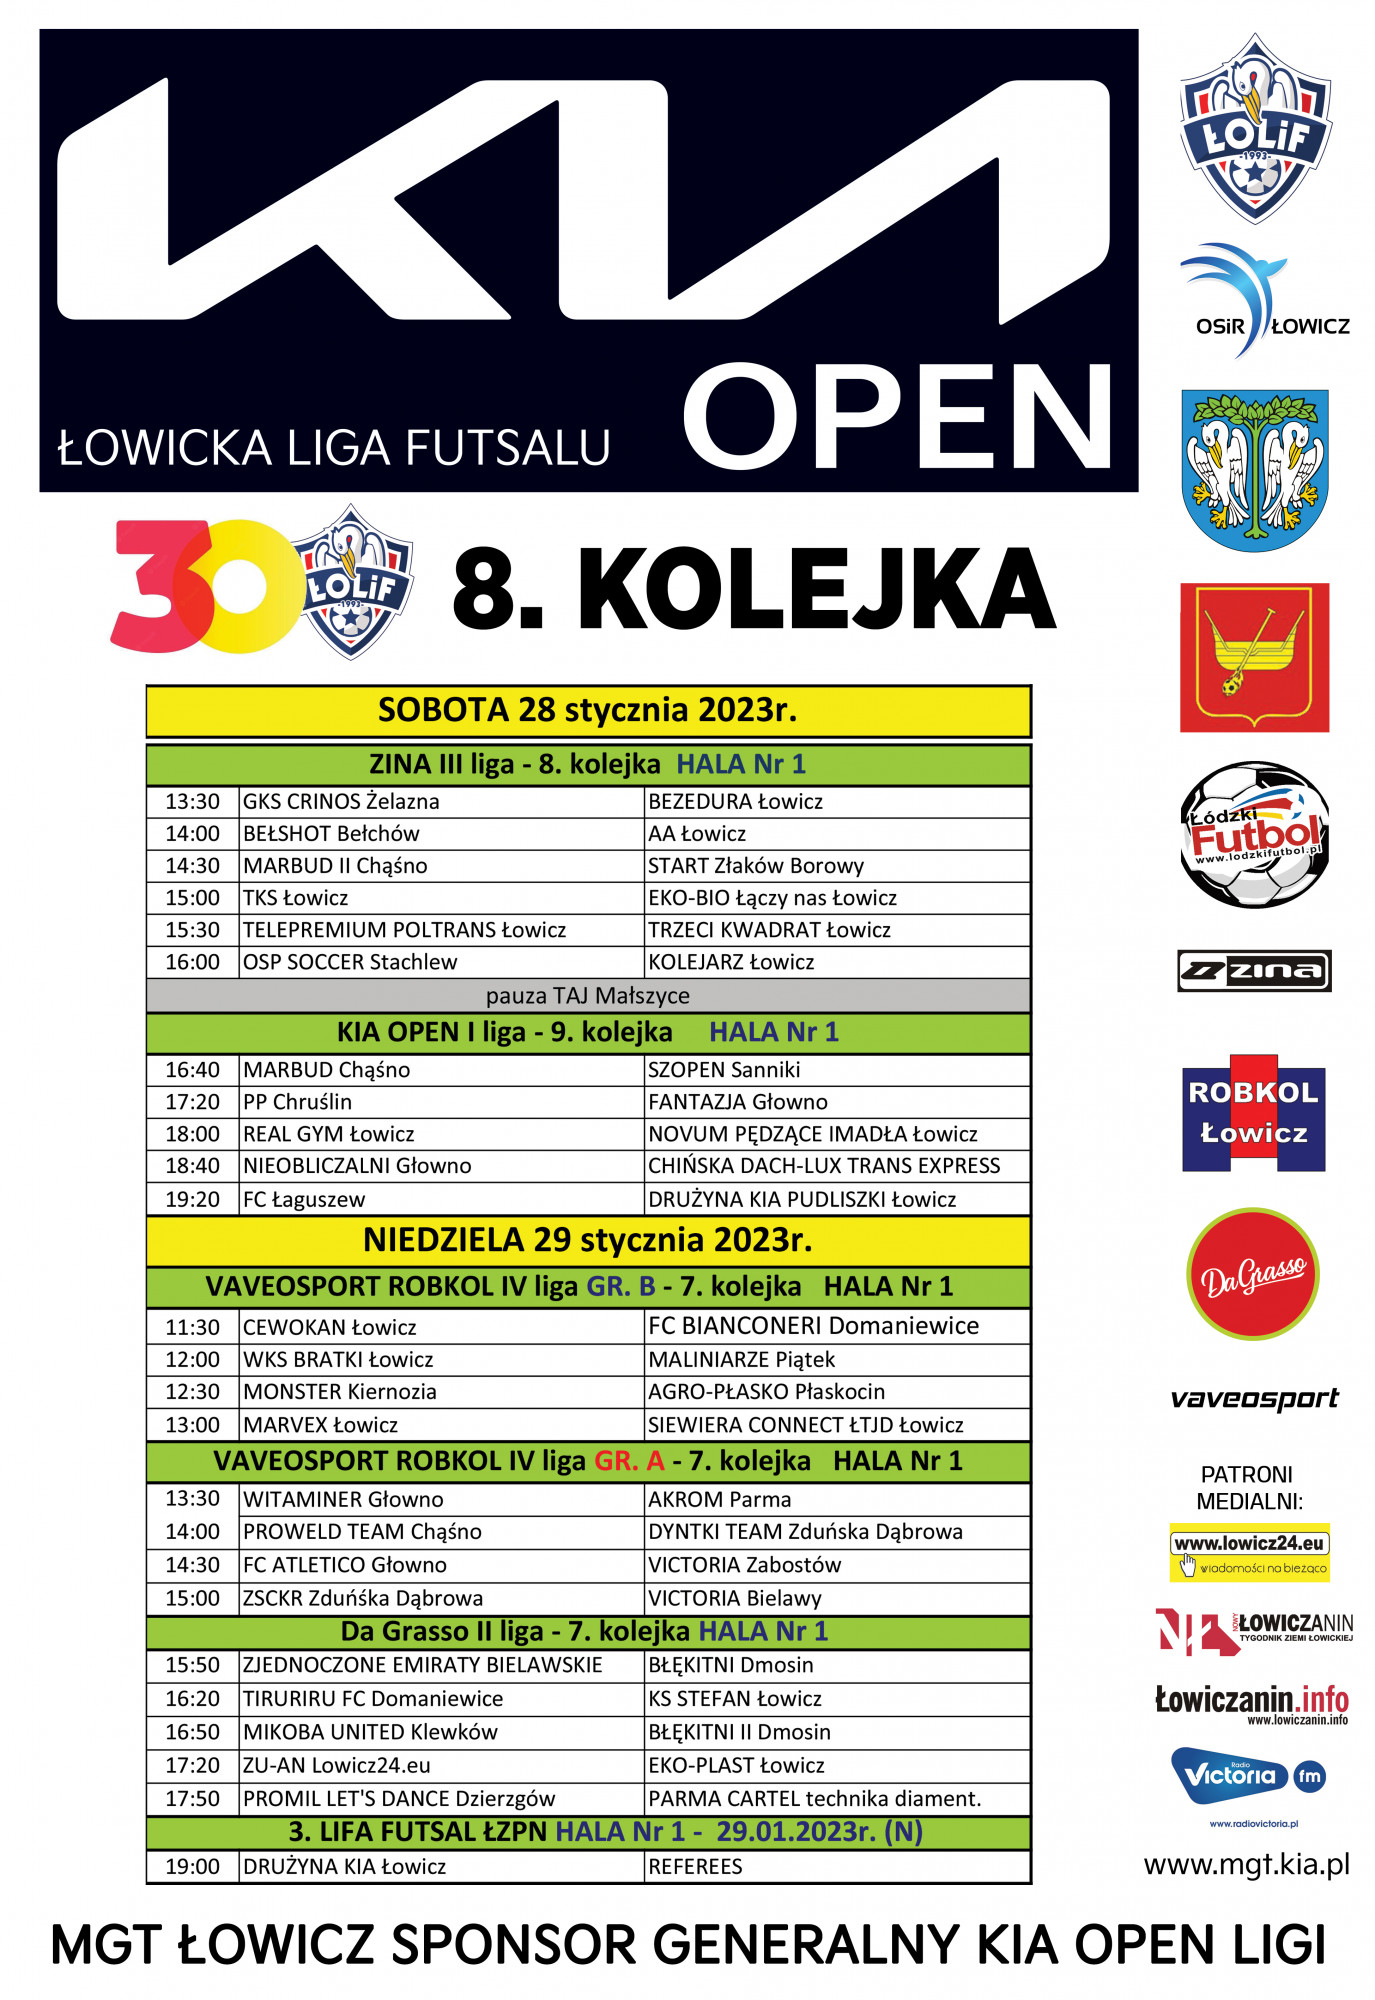 Fot.: Łowicka Liga Futsalu.